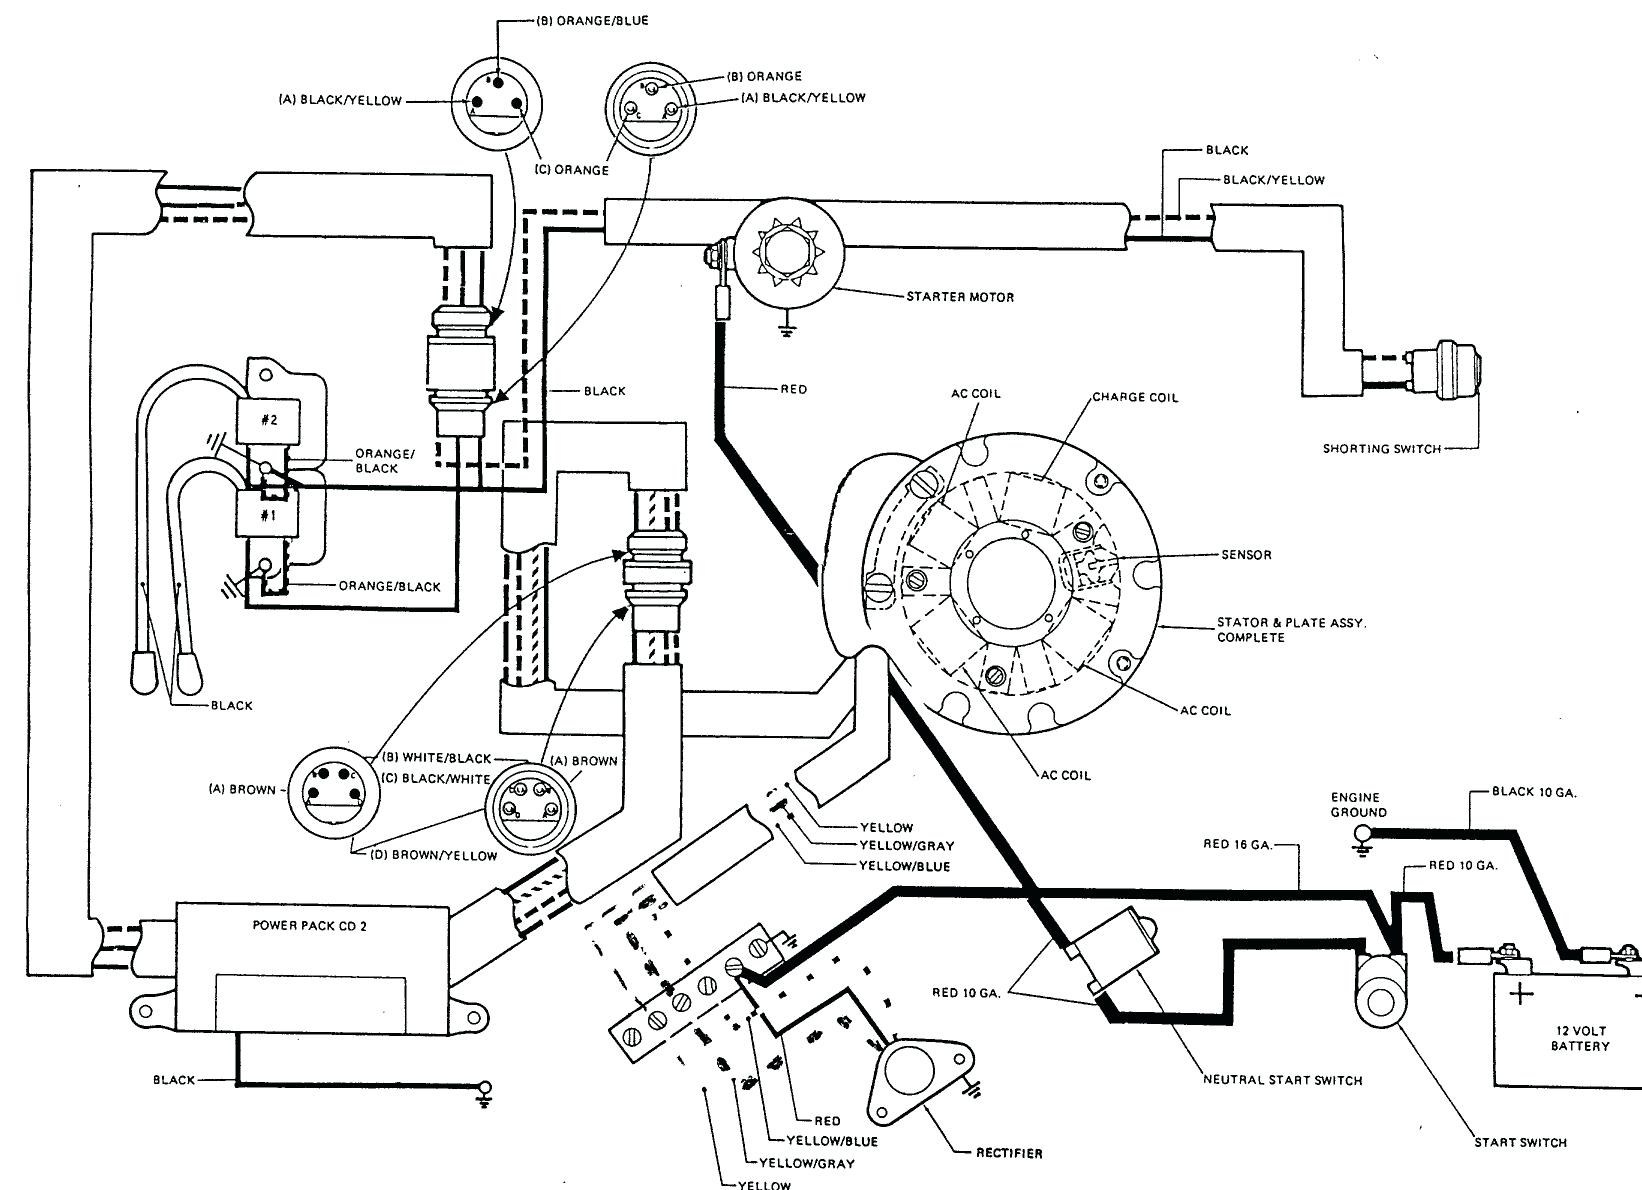 [DIAGRAM] For Marathon Electric Motor Single Phase Wiring Diagrams